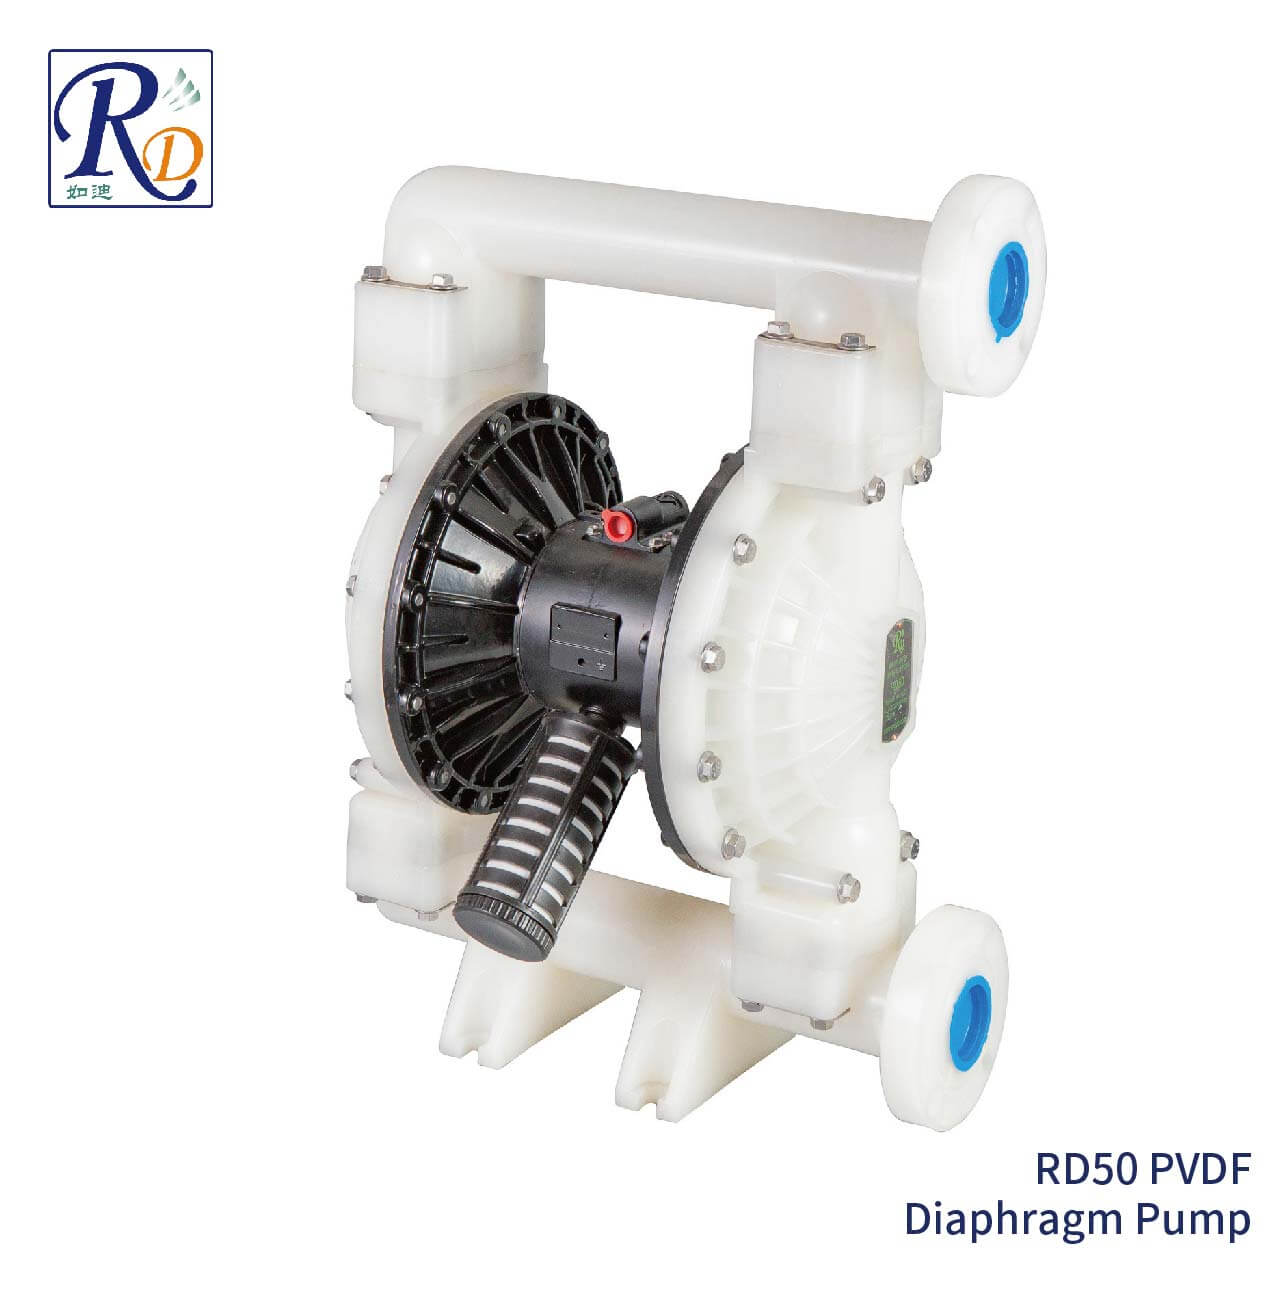 RD50 PVDF Diaphragm Pump